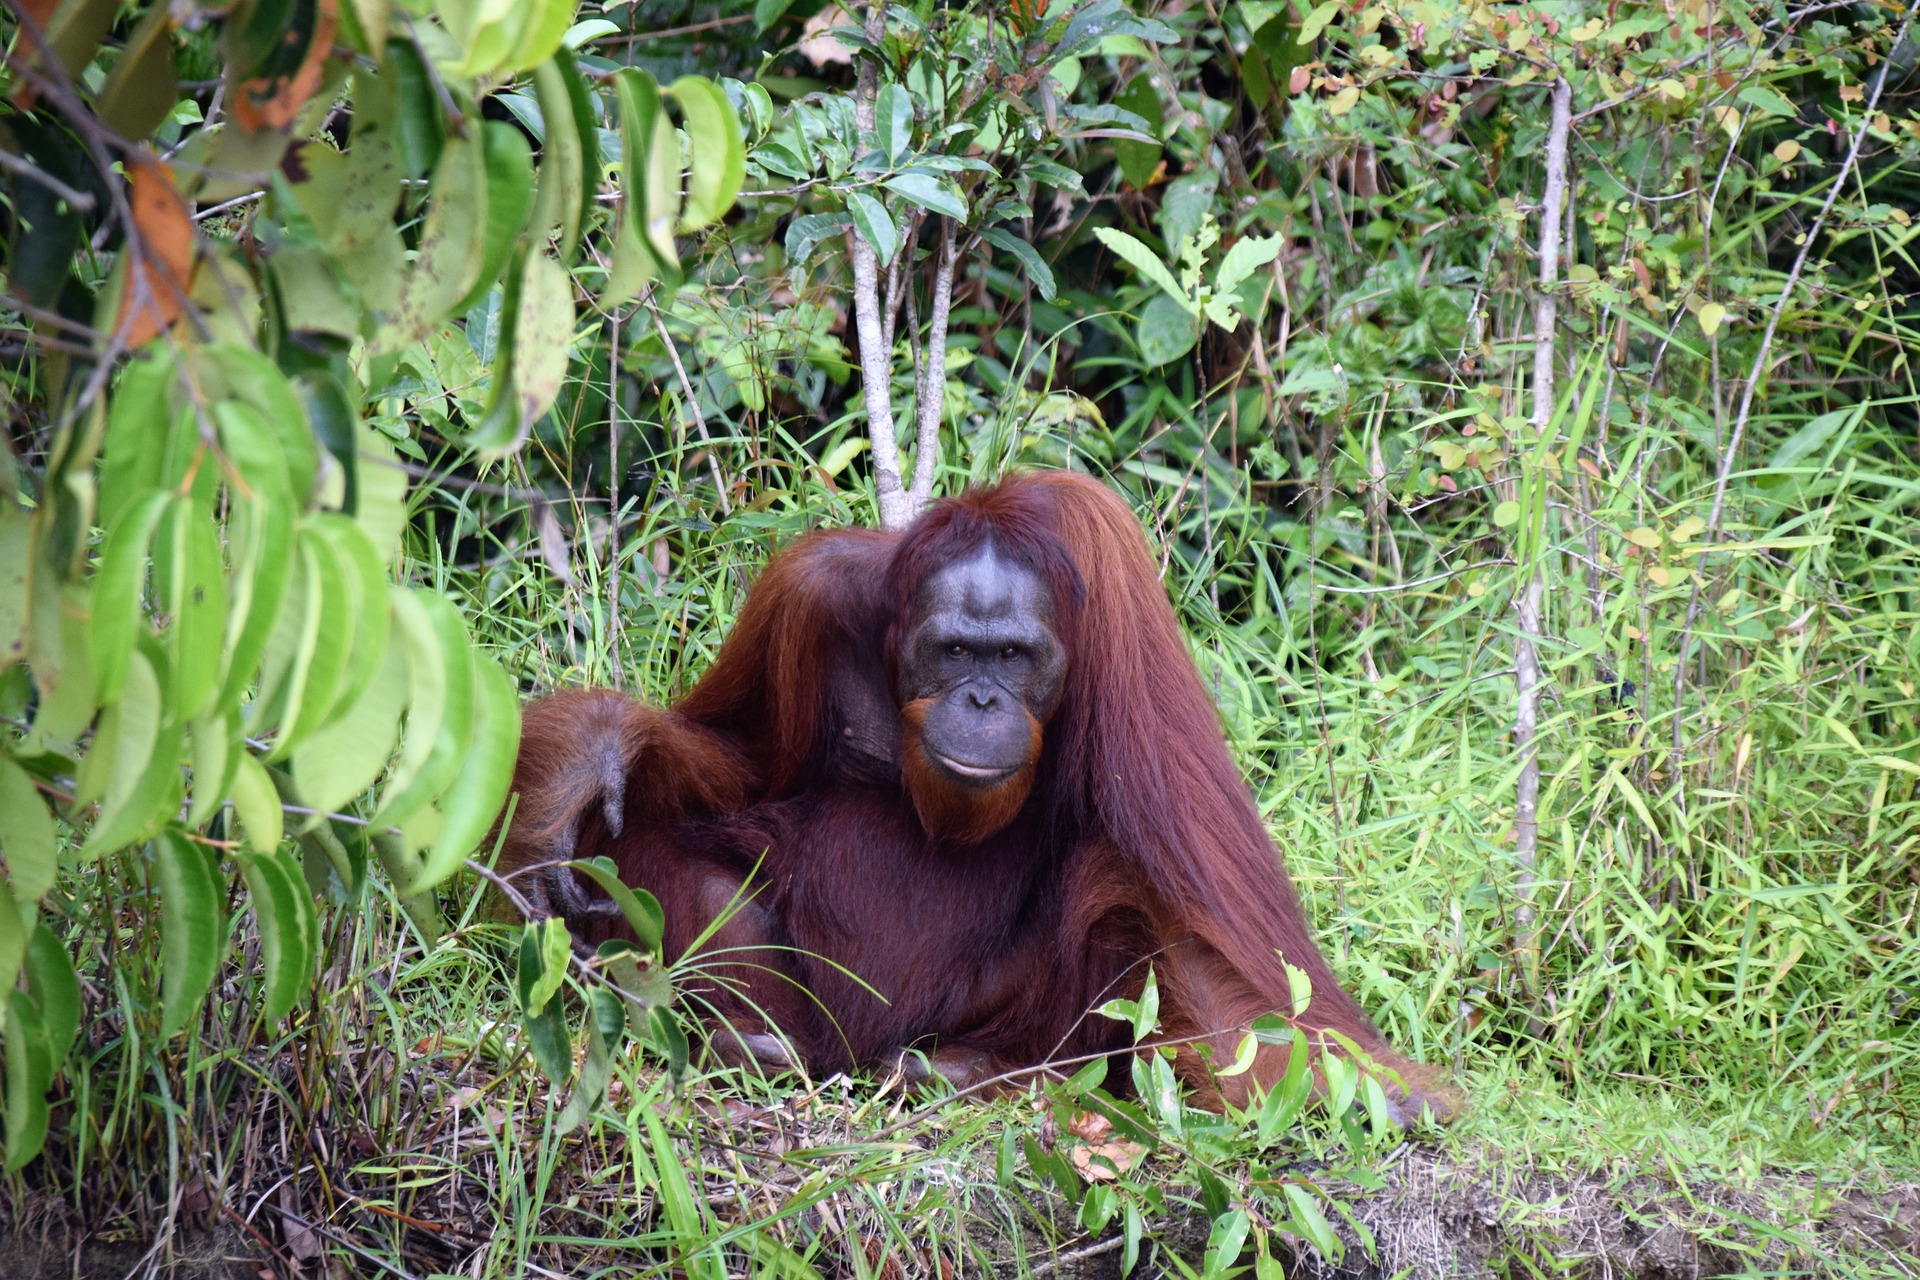 where do orangutans live